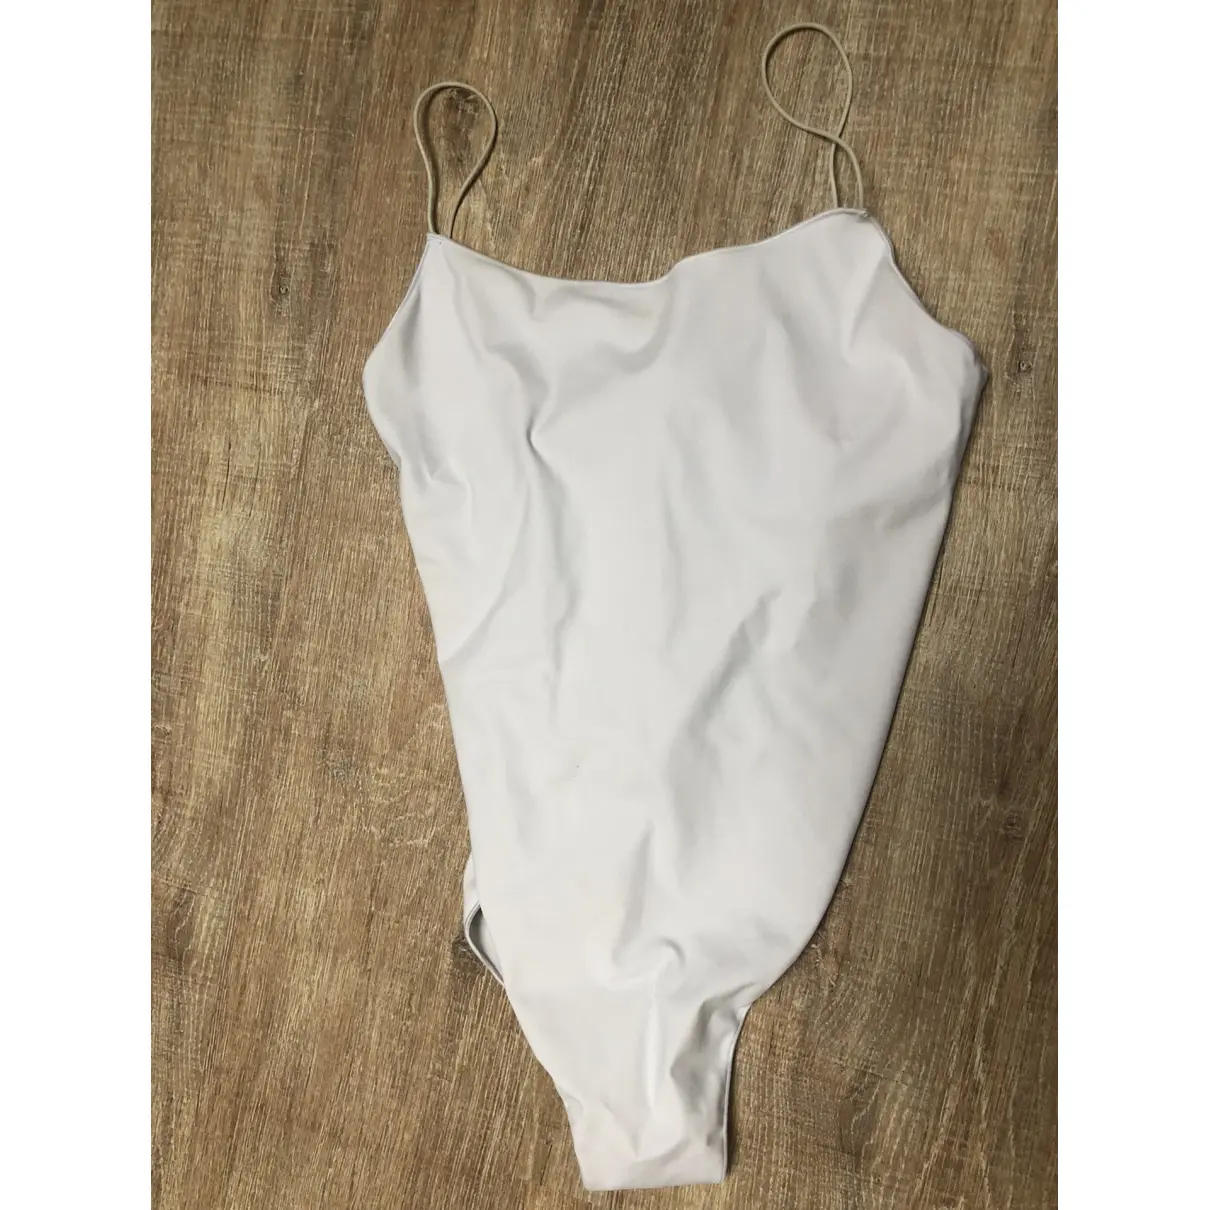 Buy Tropic of C One-piece swimsuit online